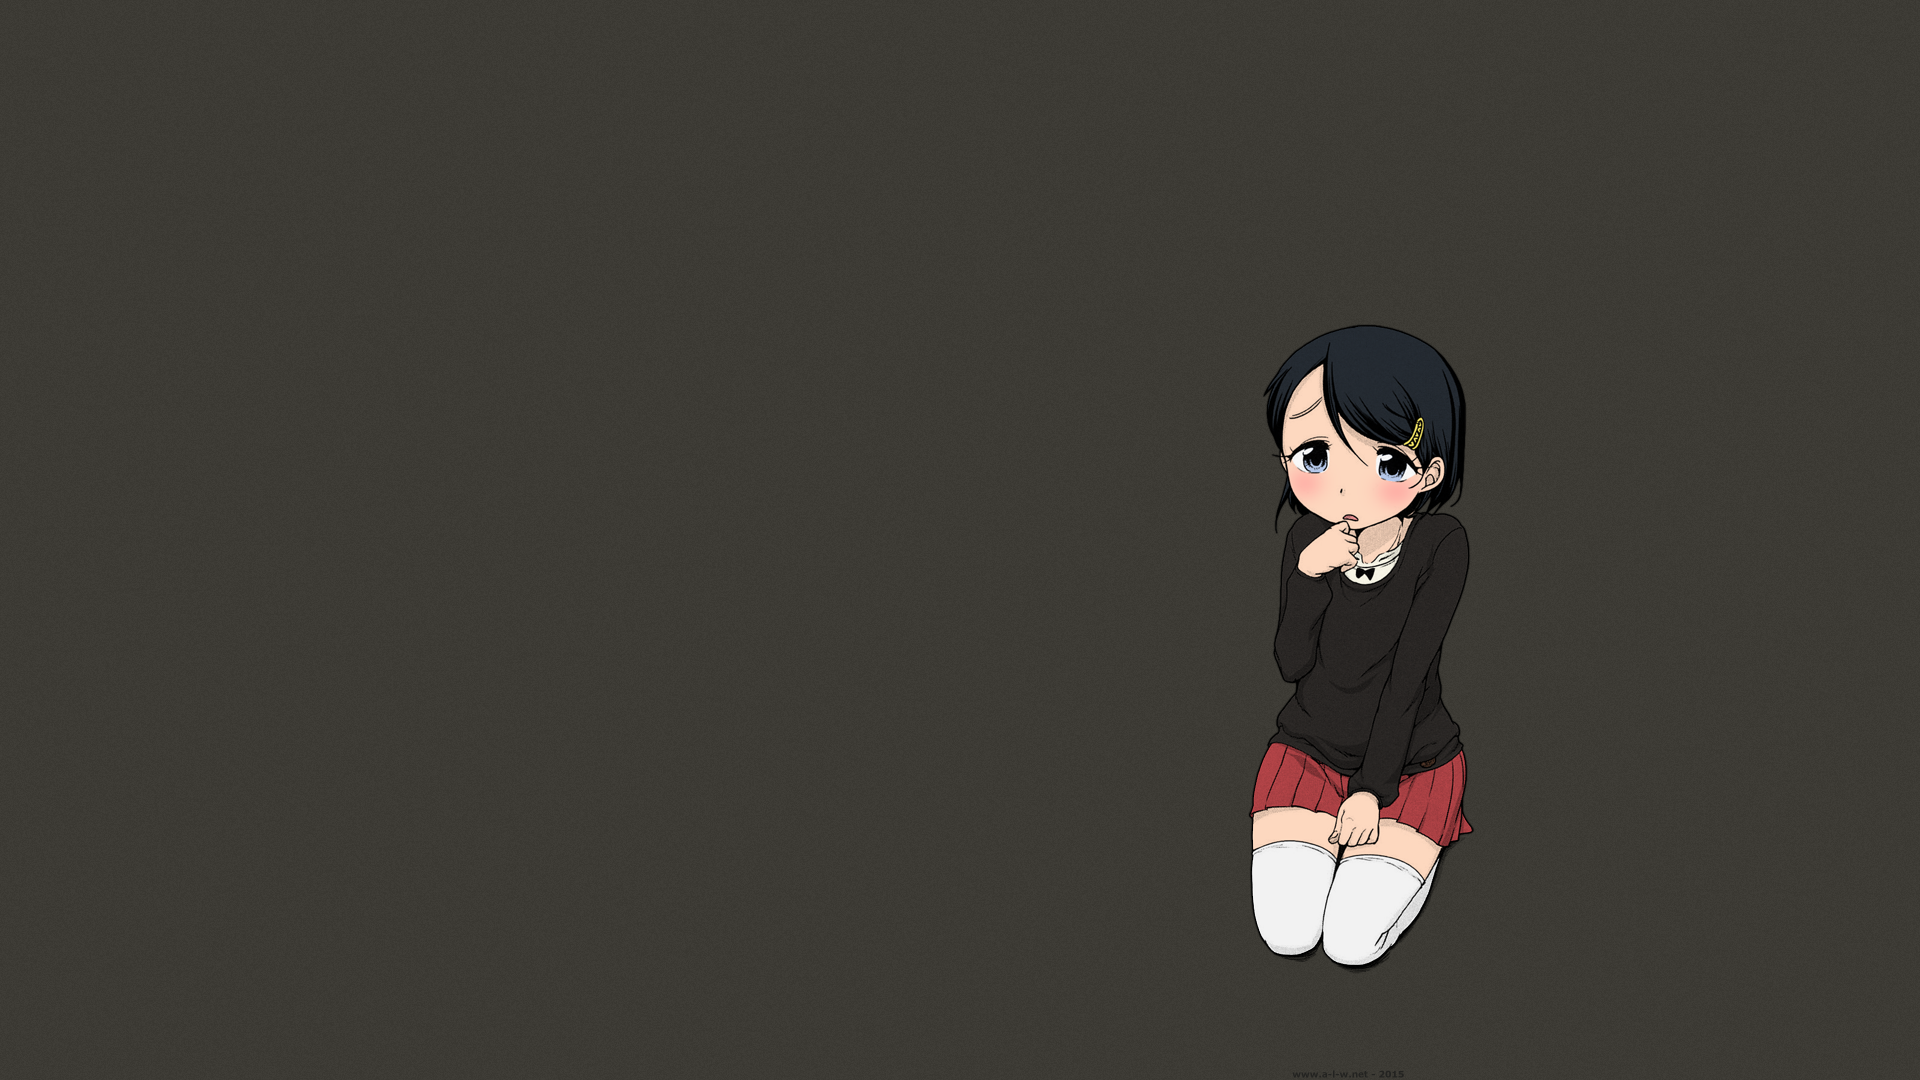 Anime 1920x1080 short hair miniskirt school uniform schoolgirl stockings dark hair shy anime girls manga anime kneeling sad simple background